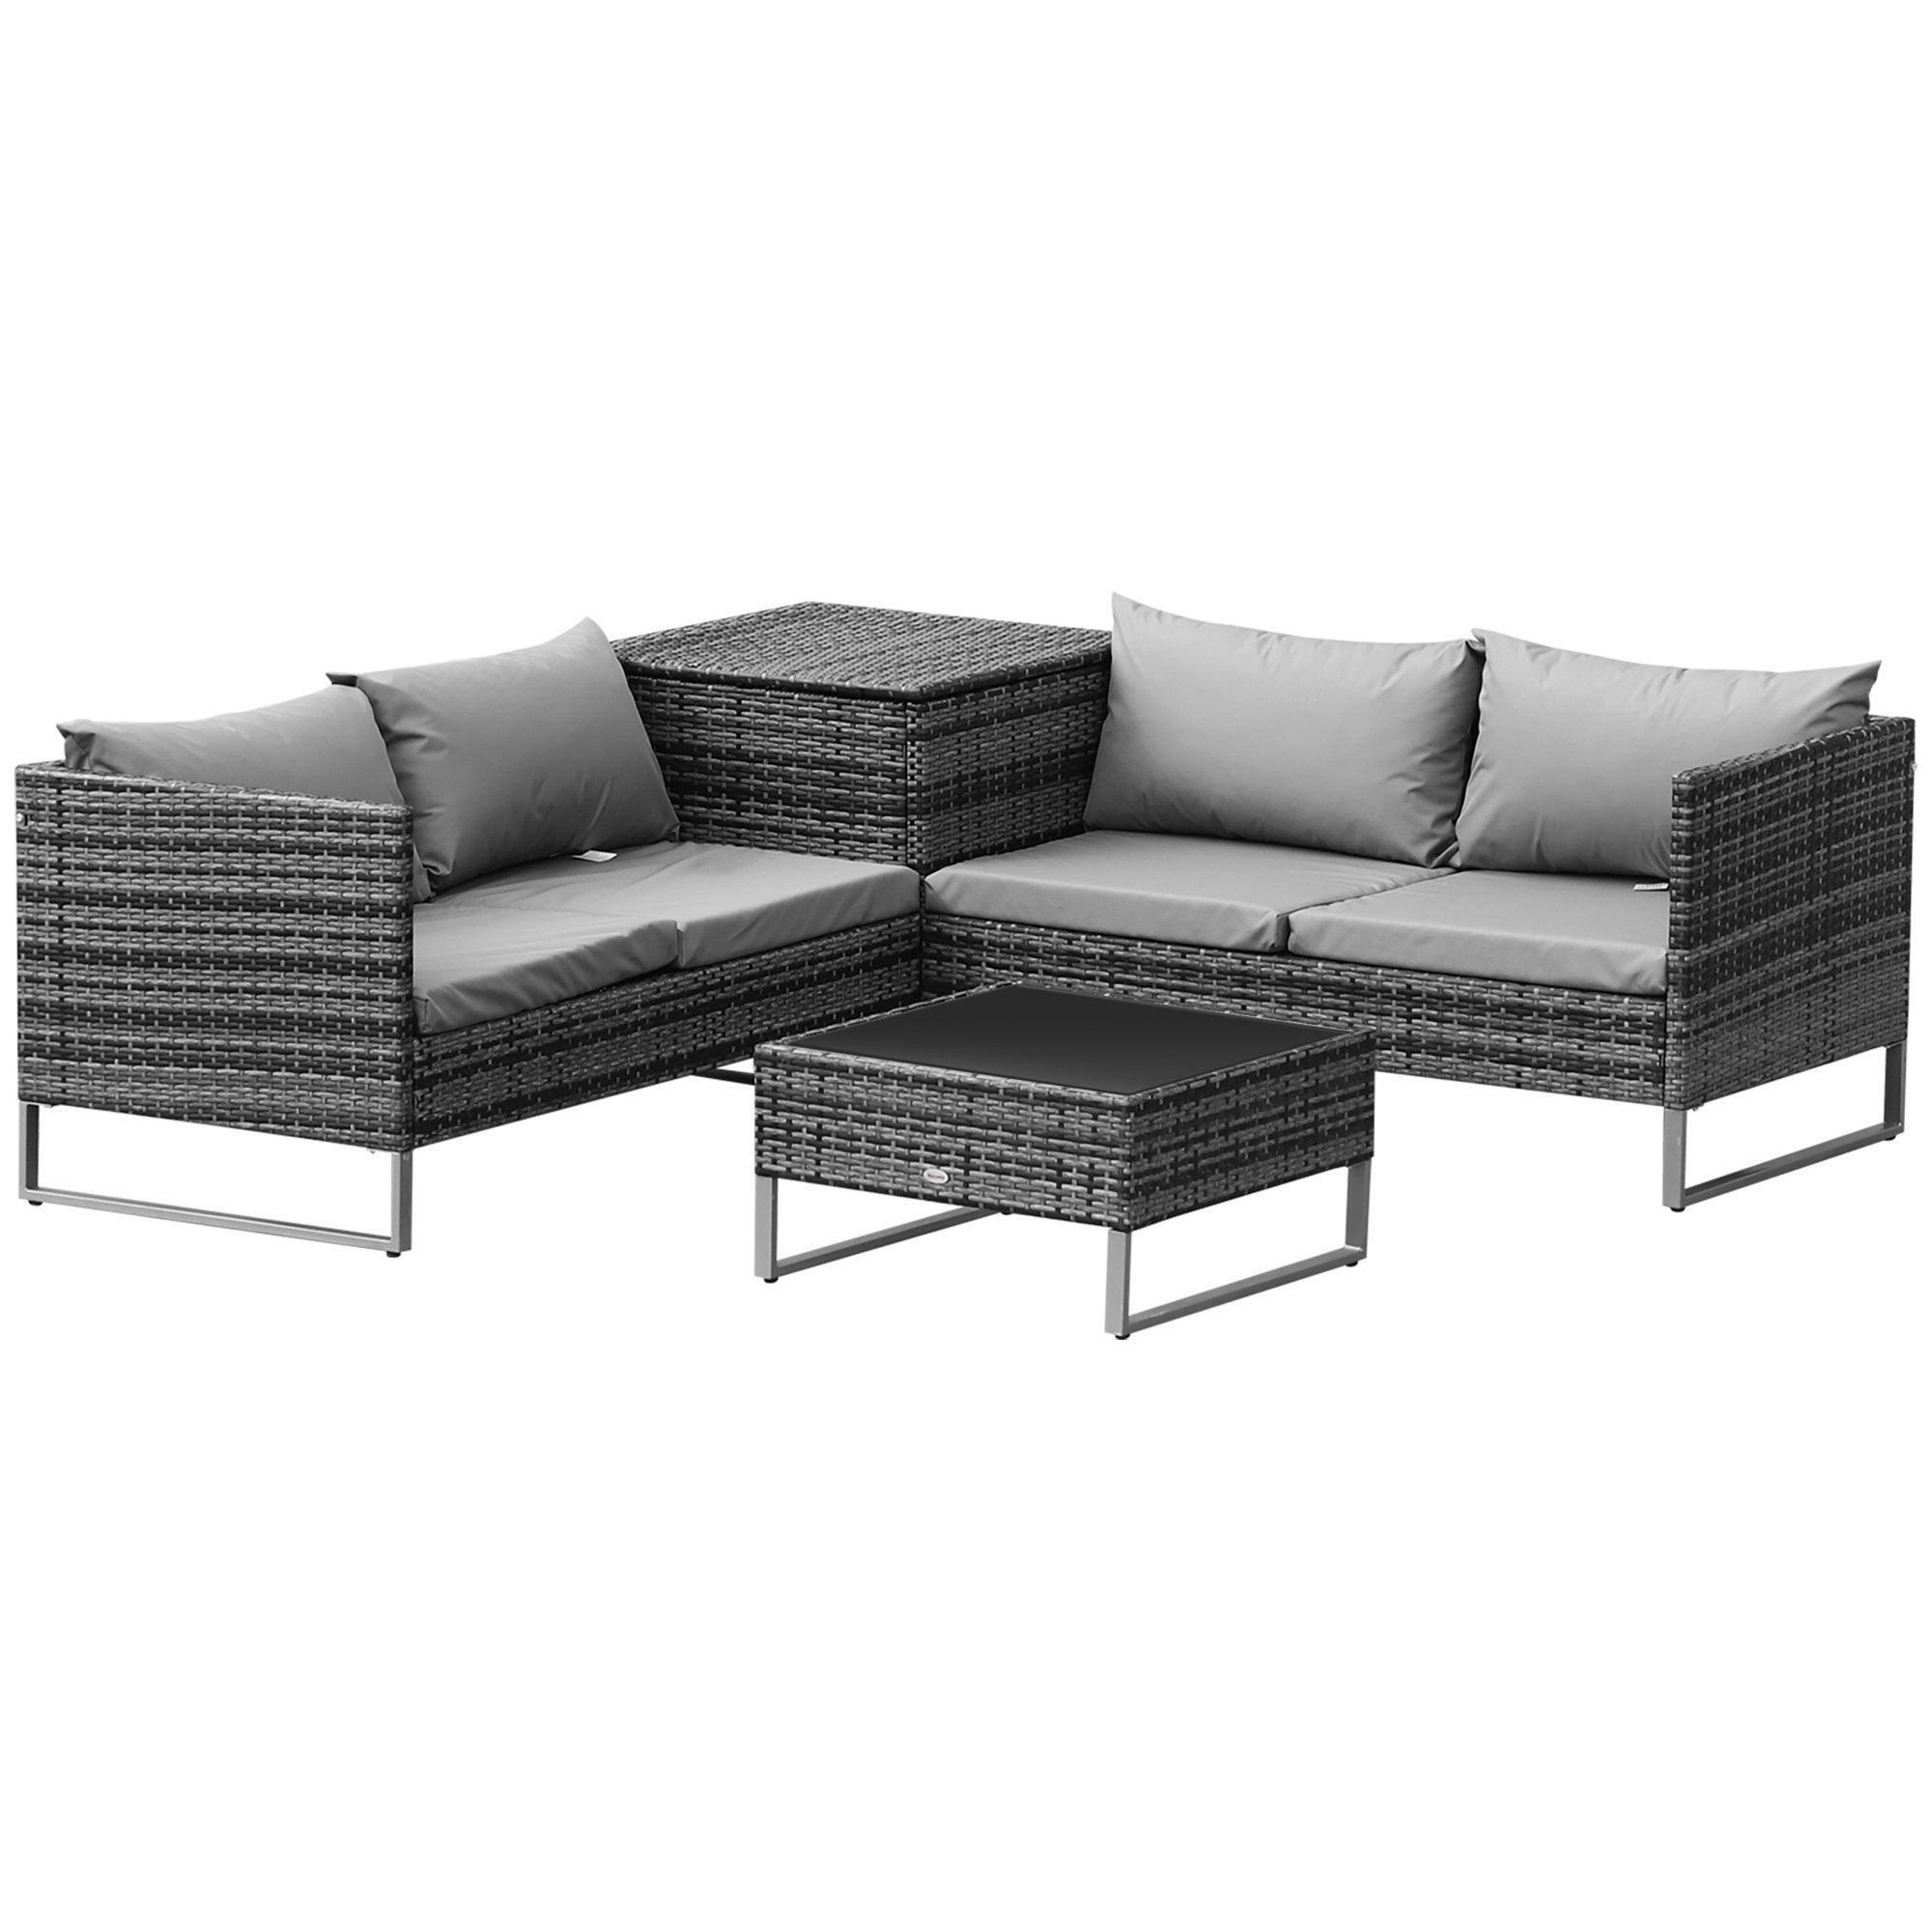 4Pcs Patio Rattan Sofa Garden Furniture Set with Table Cushions - image 1